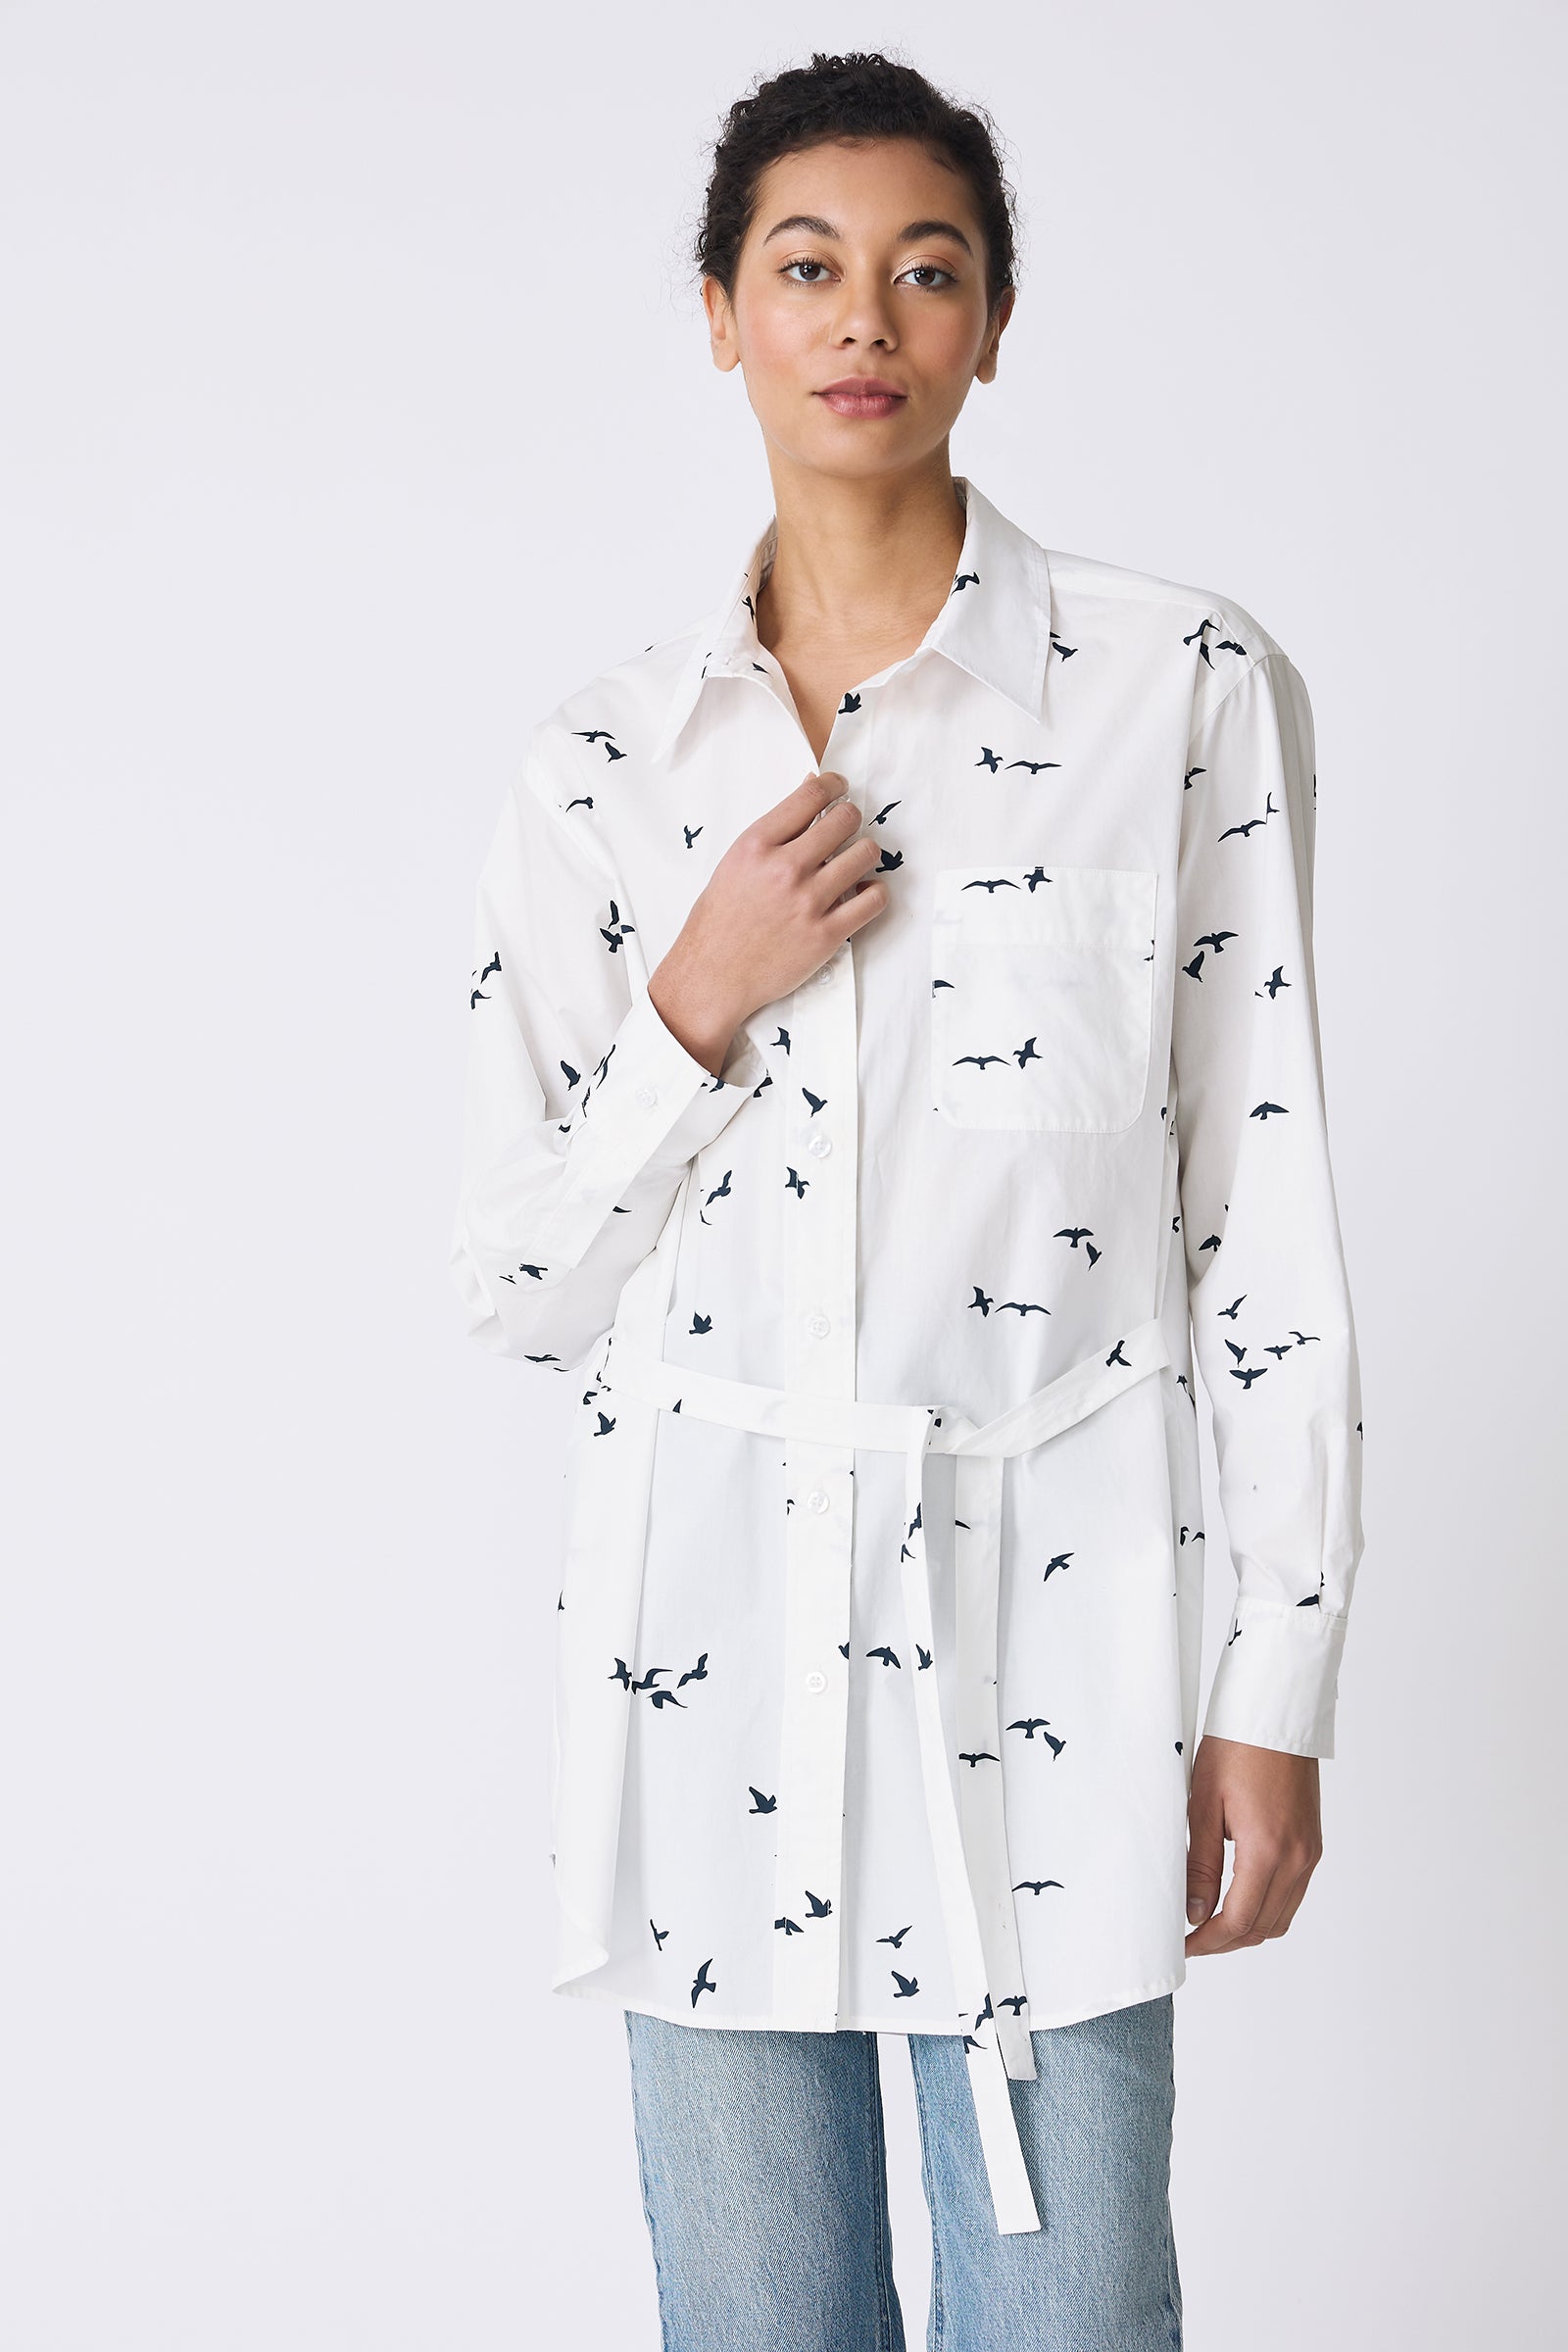 Kal Rieman Deanna Shirt in White Bird Print on model touching button front view